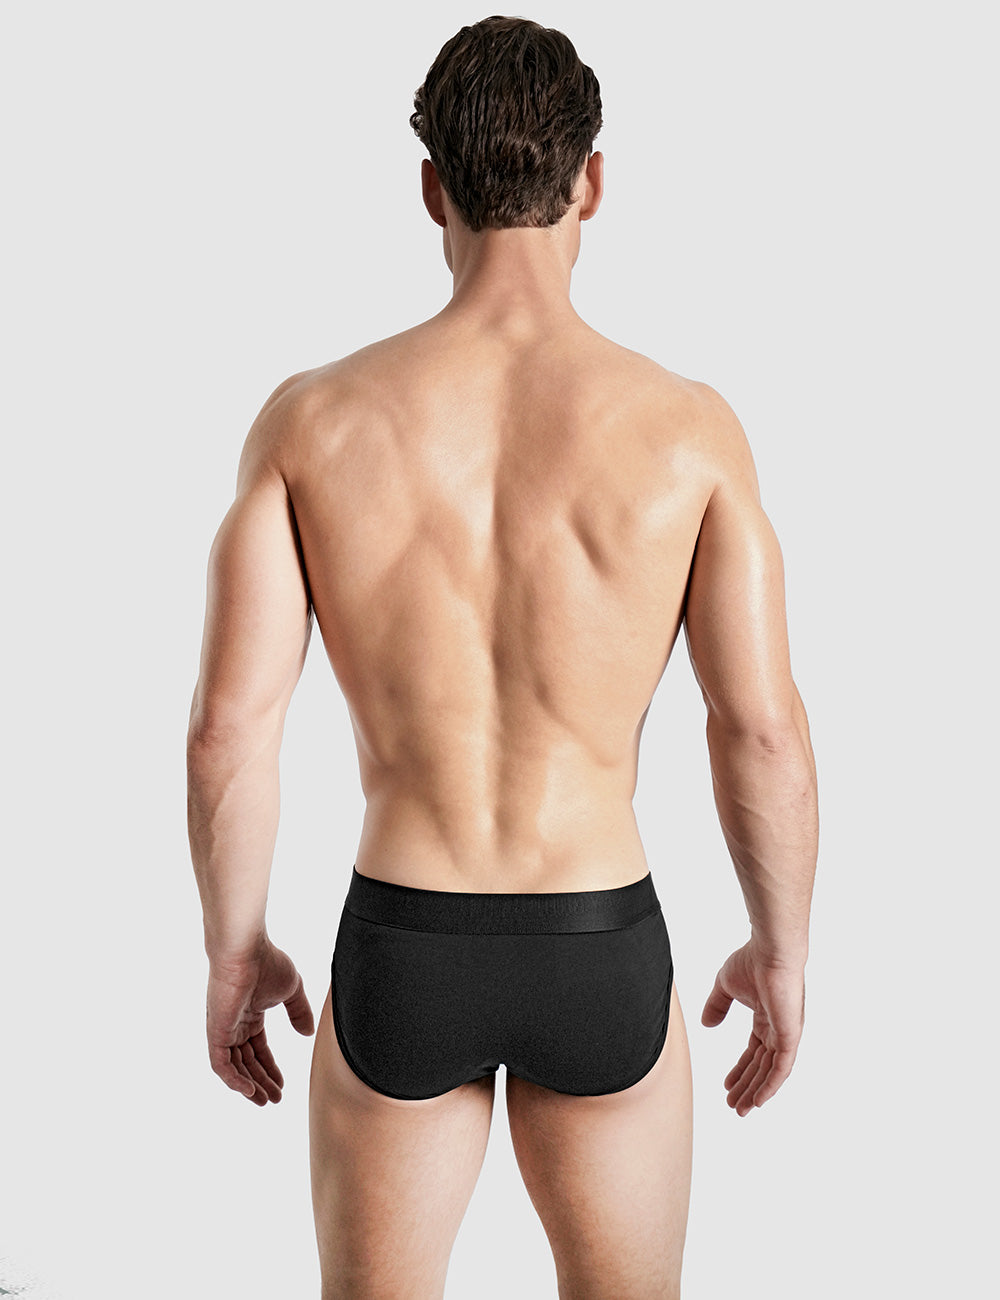 Custom Mens Butt Enhancing Underwear Black Boxer Briefs with